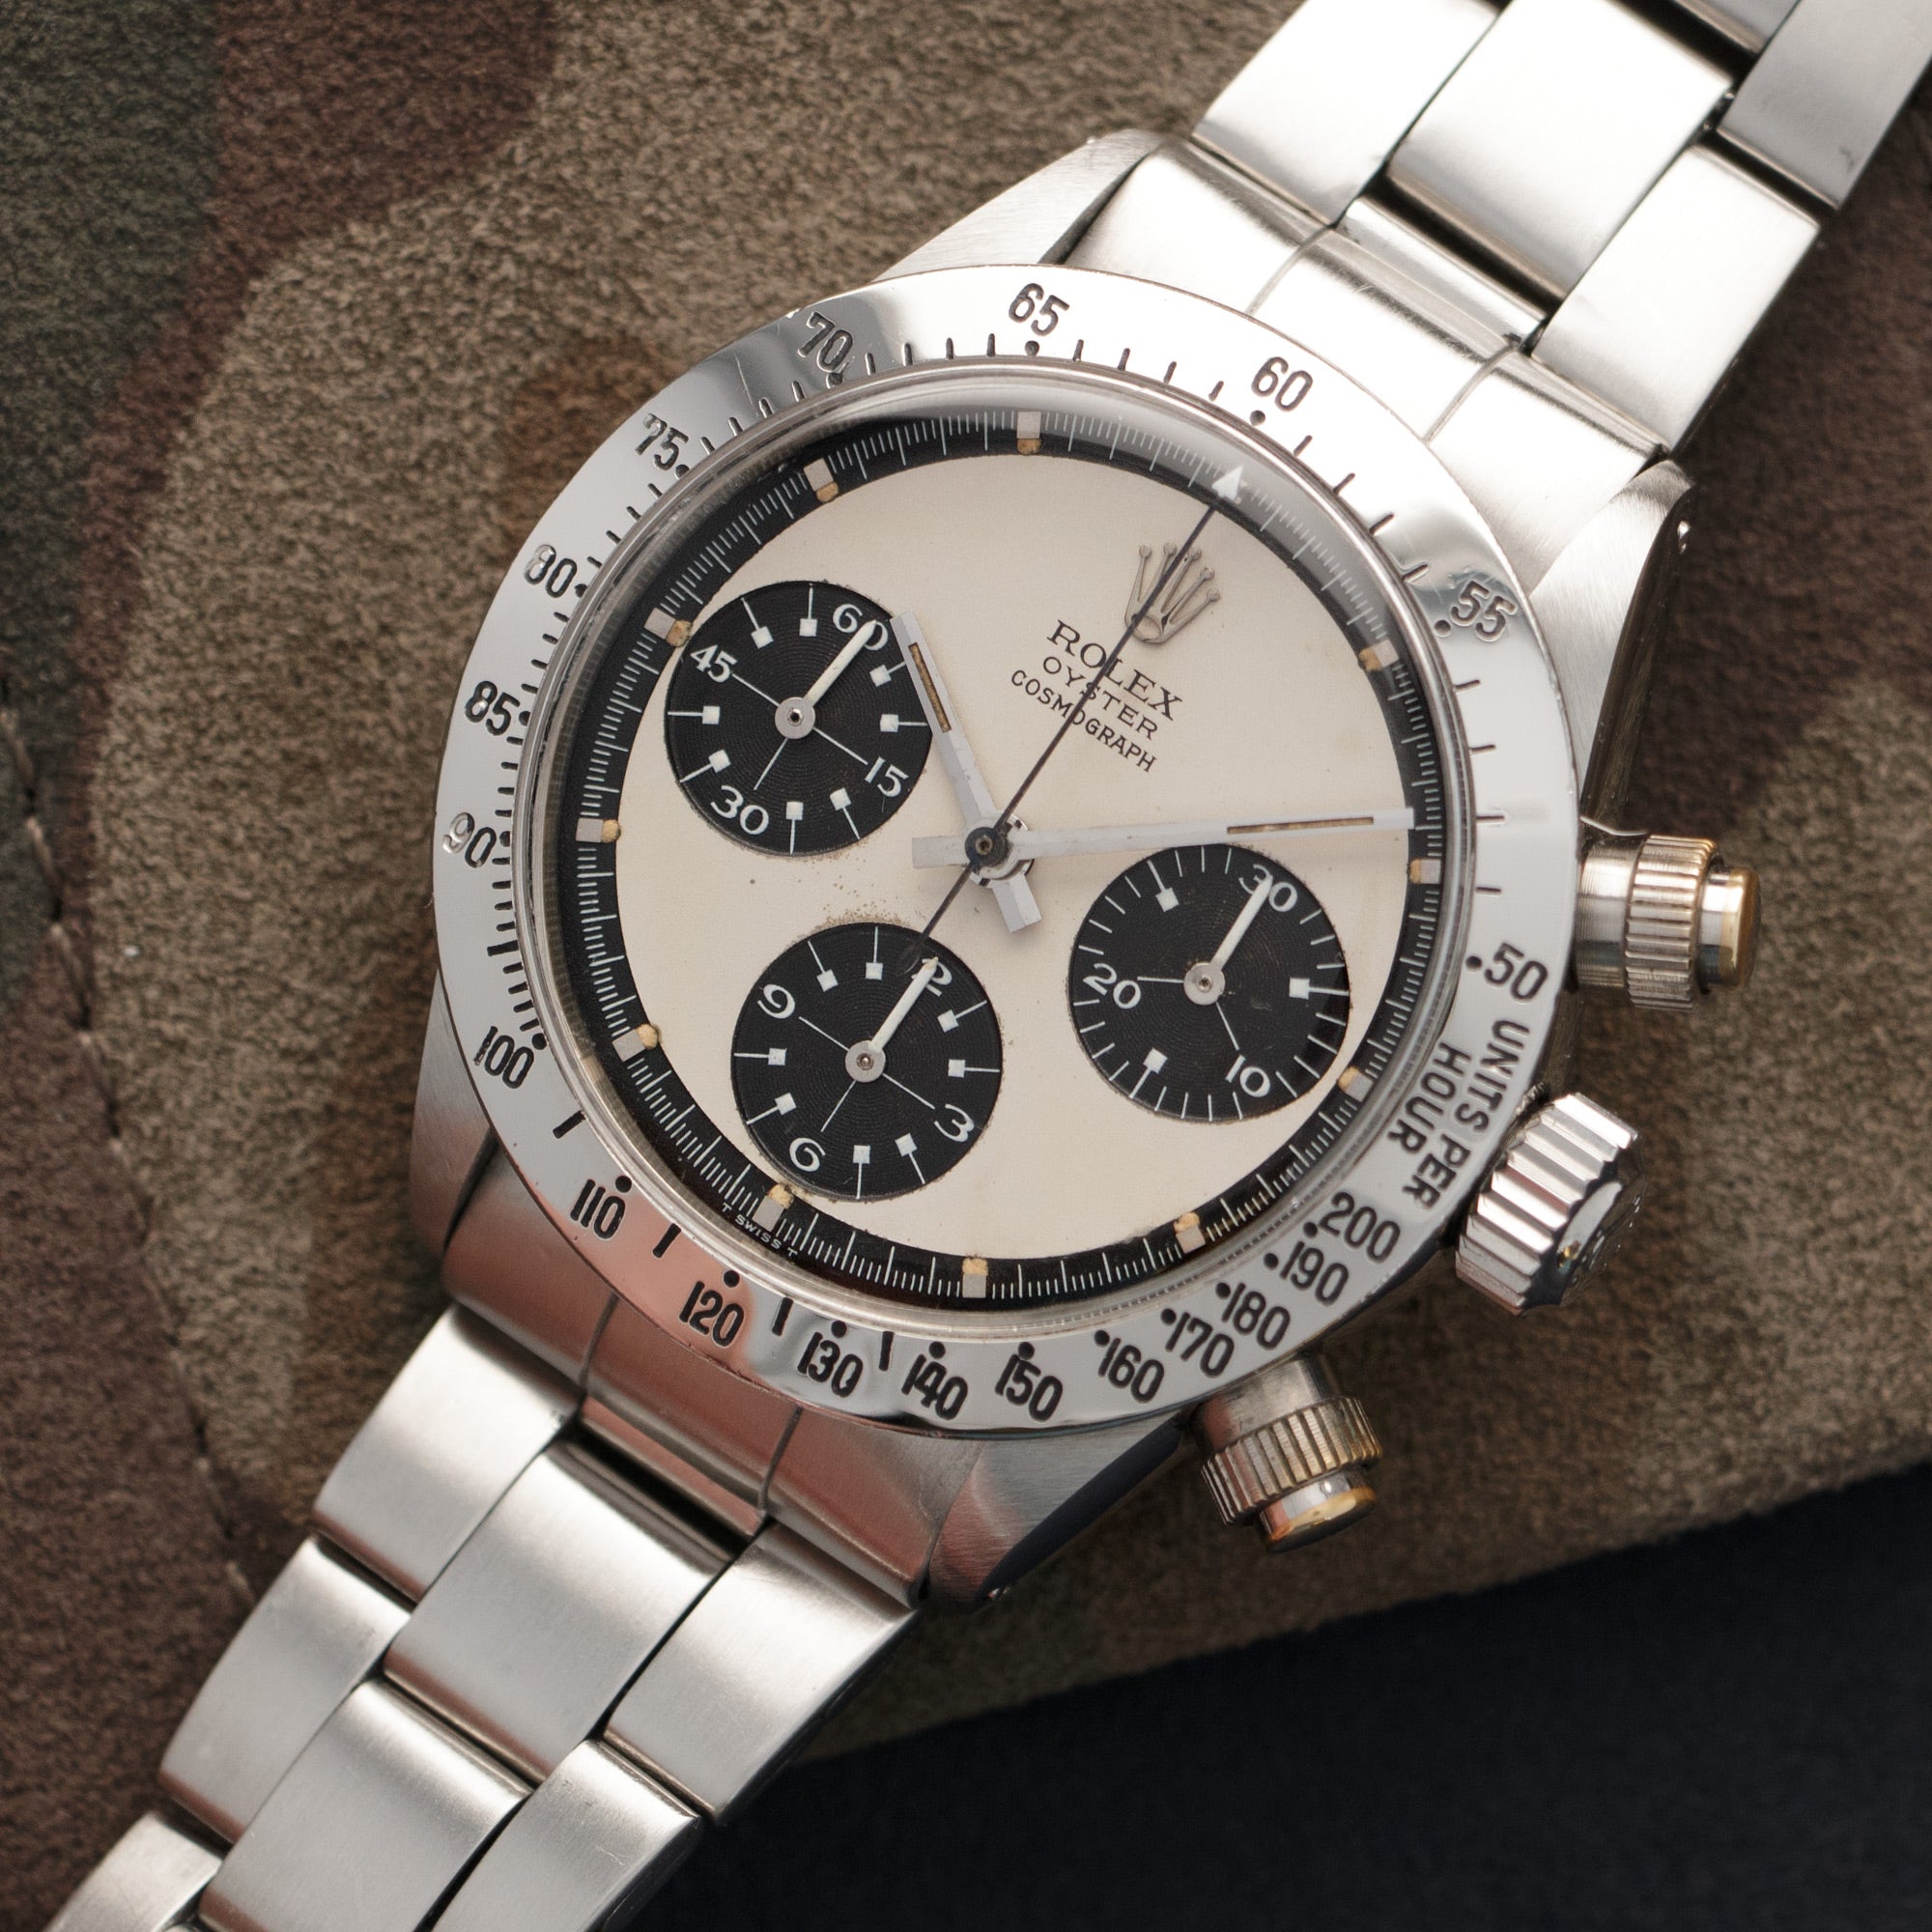 Rolex - Rolex Oyster Cosmograph Daytona Paul Newman Watch Ref. 6265 - The Keystone Watches